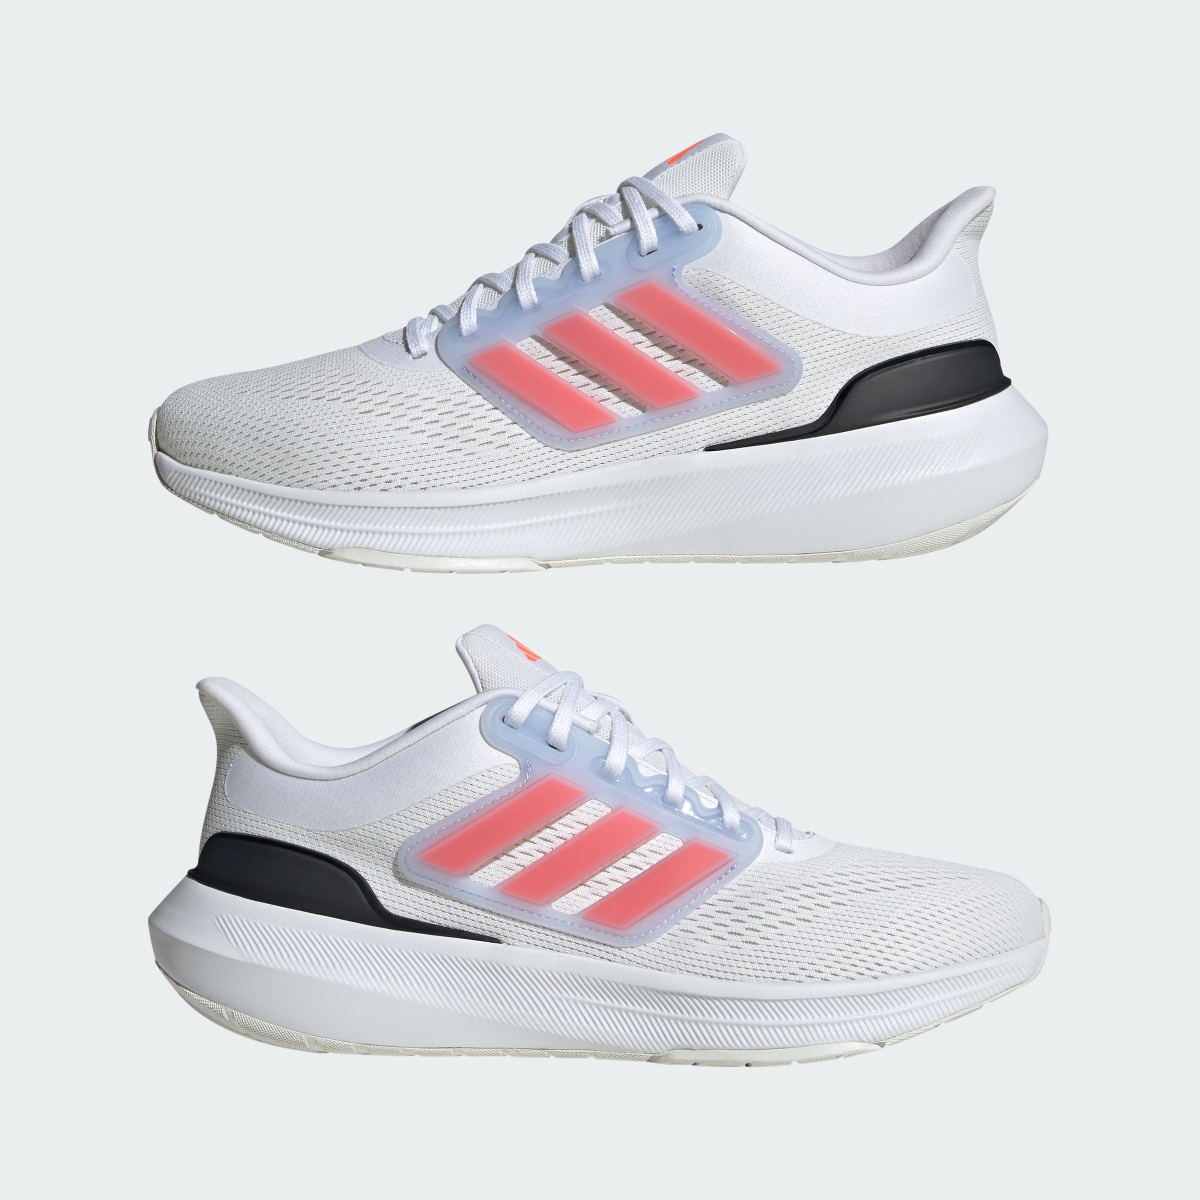 Adidas Ultrabounce Running Shoes. 11